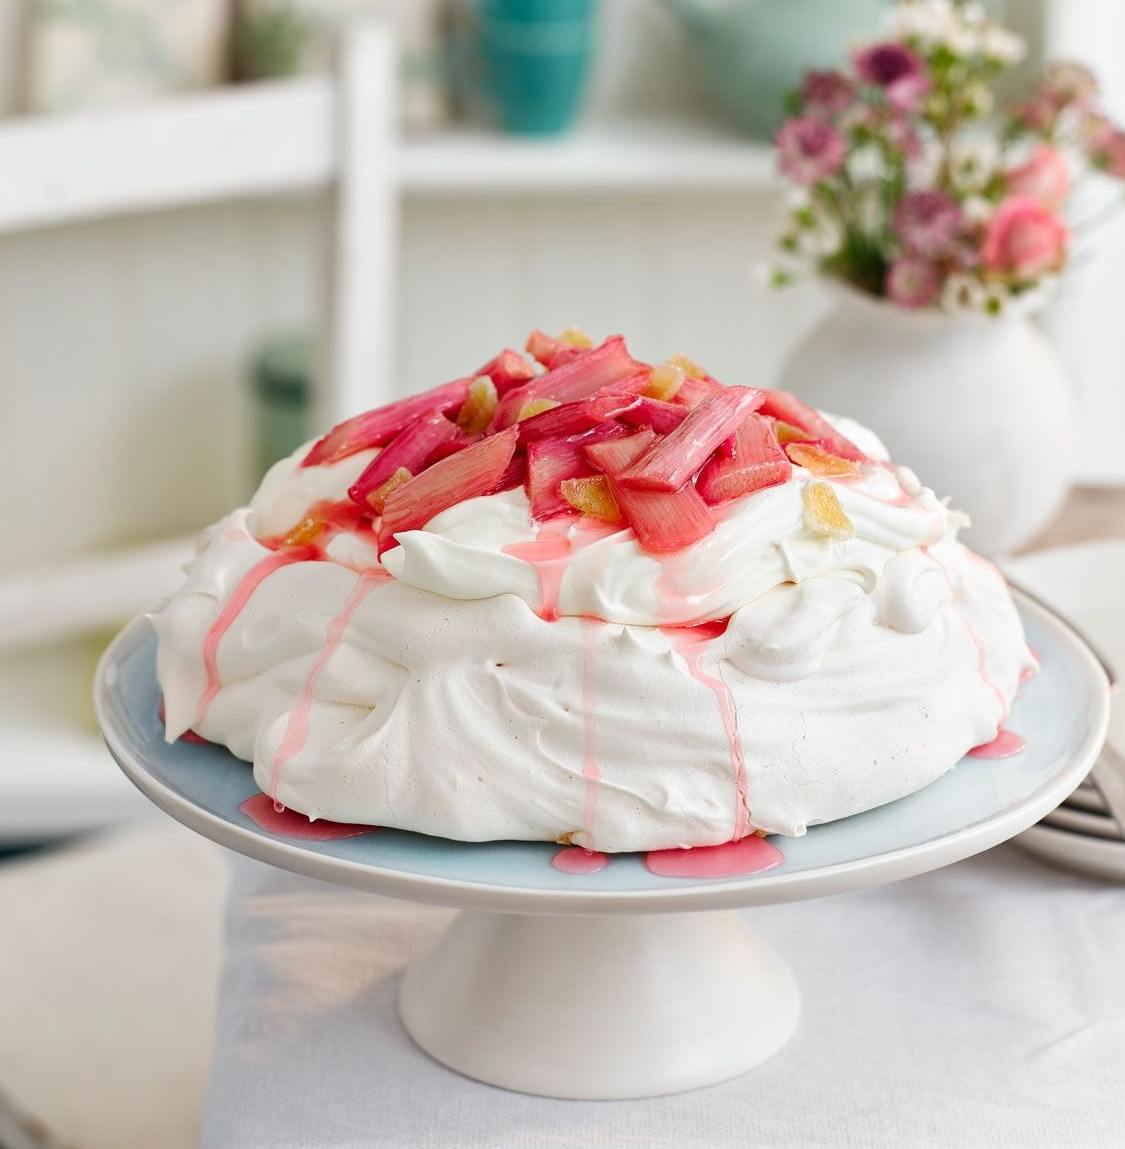 Rhubarb Cake Recipe Pavlova Torte Easy Baiser Same Make Instructions